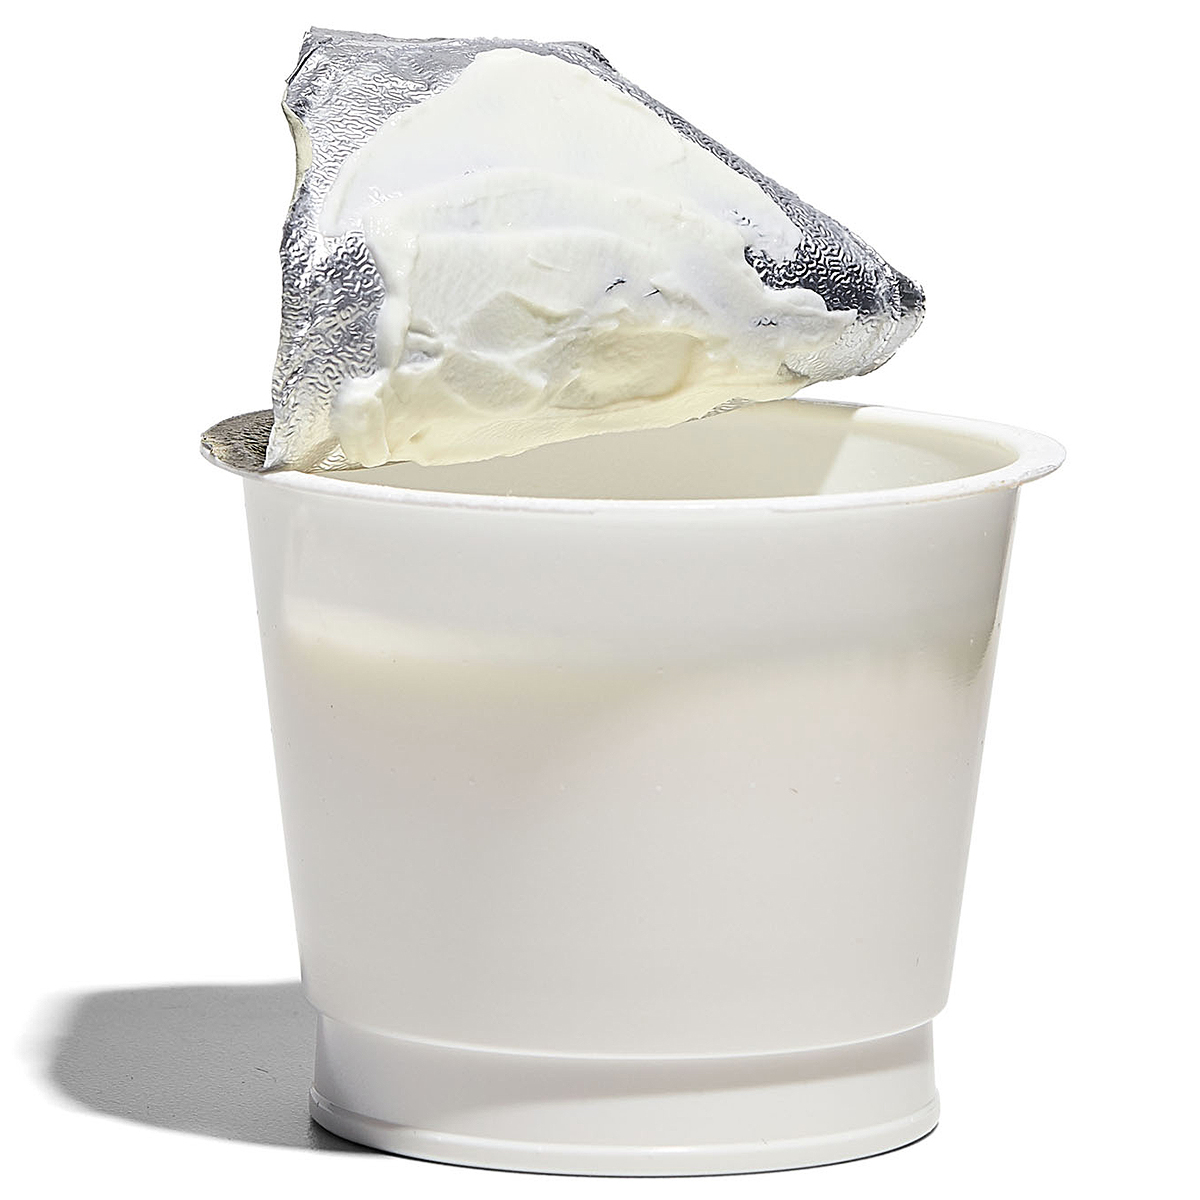 yogurt cup international type